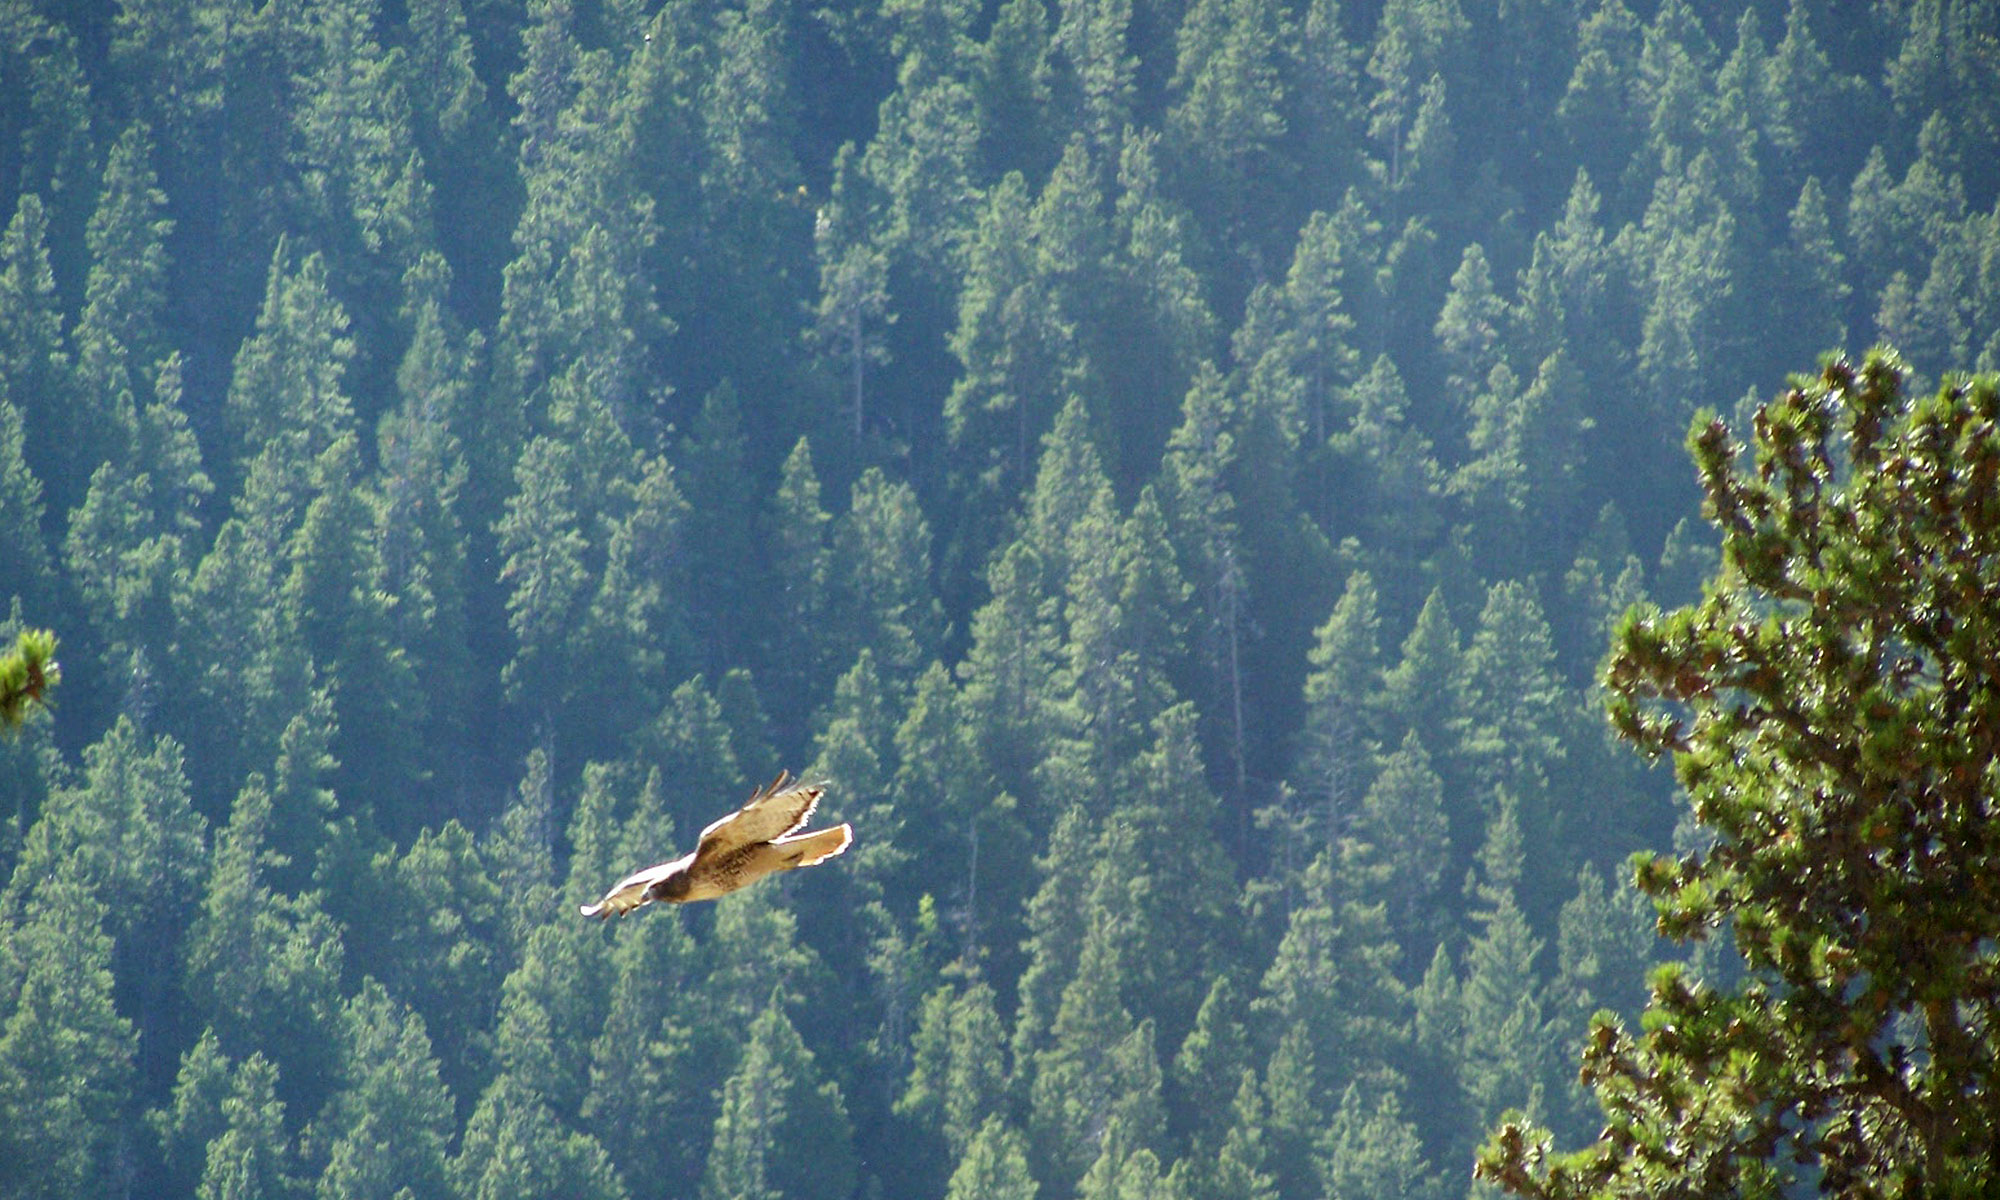 Red-tailed hawk soars over Deer Creek Valley